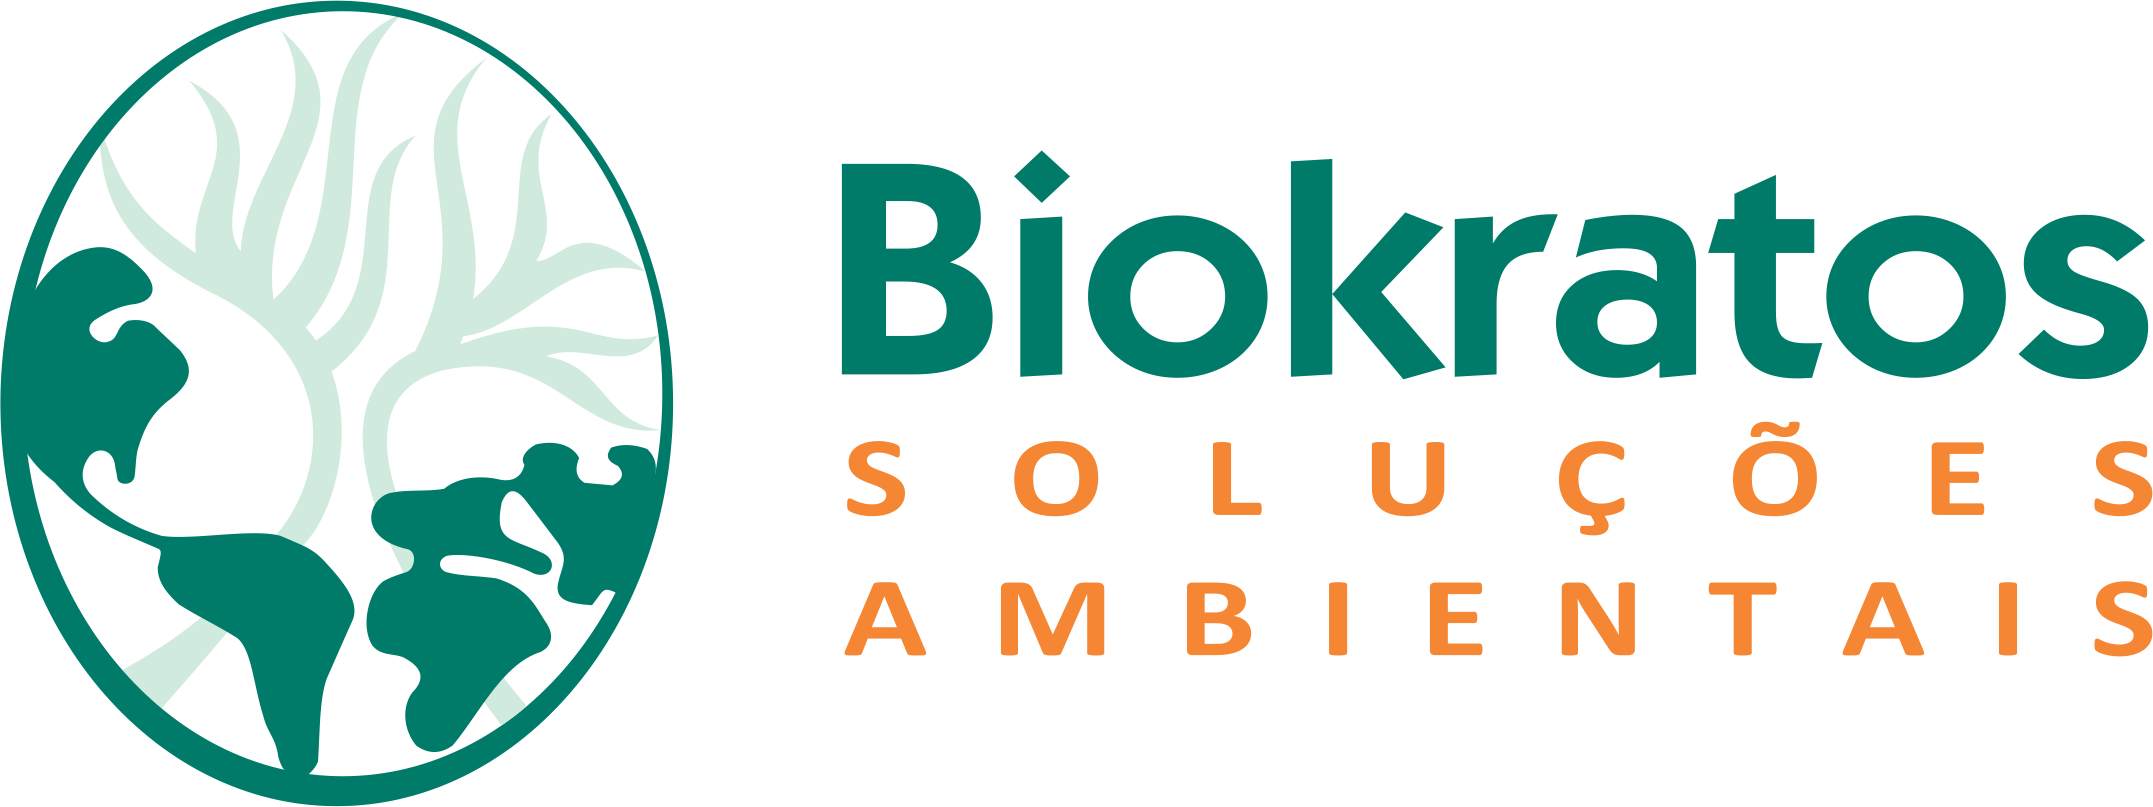 Biokratos - Soluções Ambientais